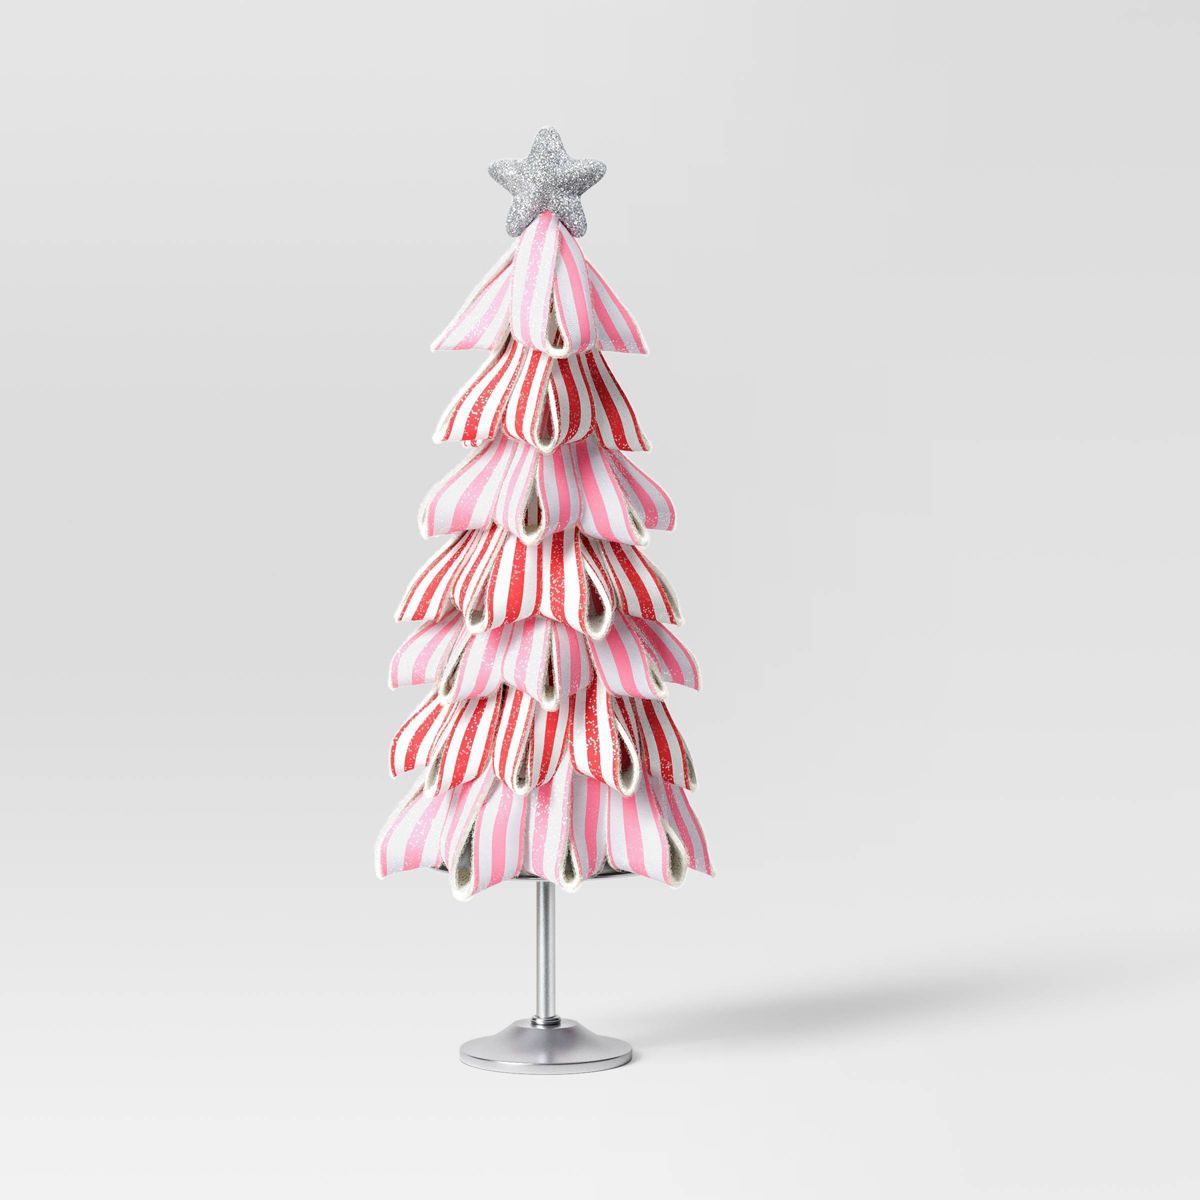 17" Glittered Striped Ribbon Christmas Tree Sculpture - Wondershop™ Pink/Red/White | Target